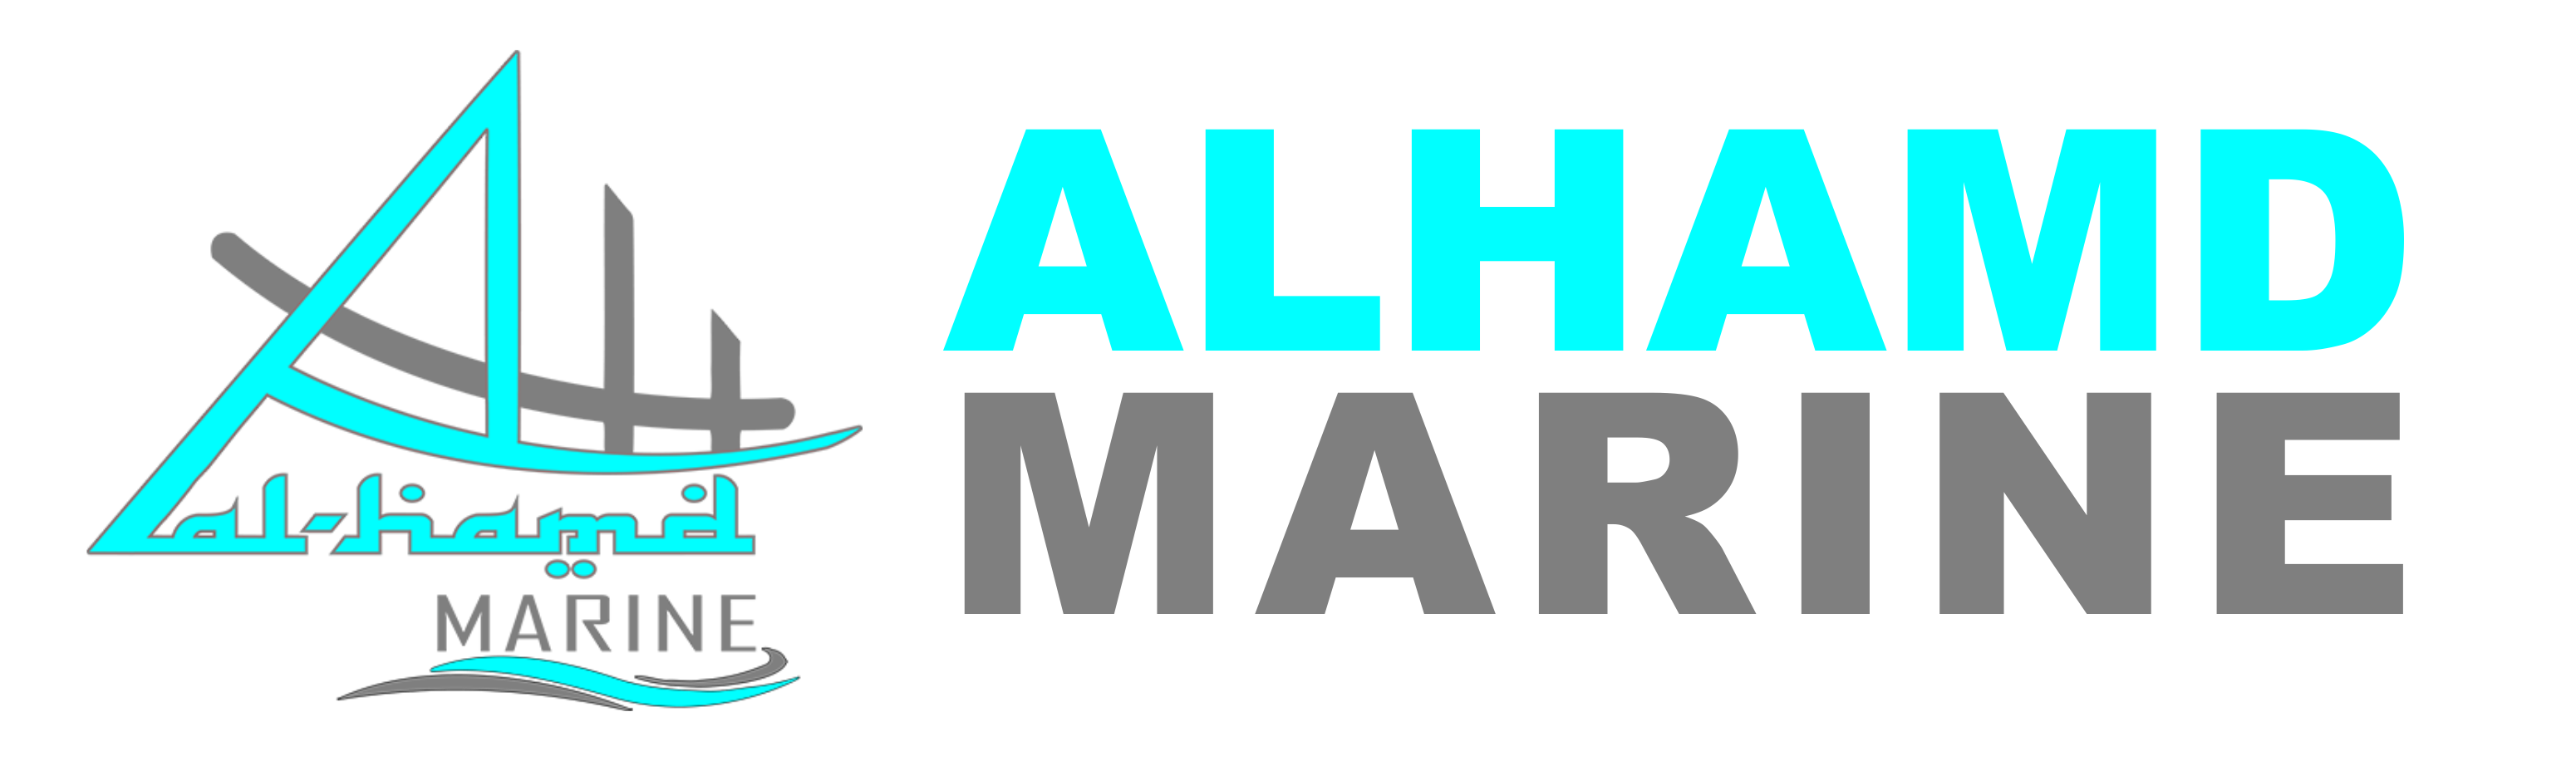 Alhamd Marine